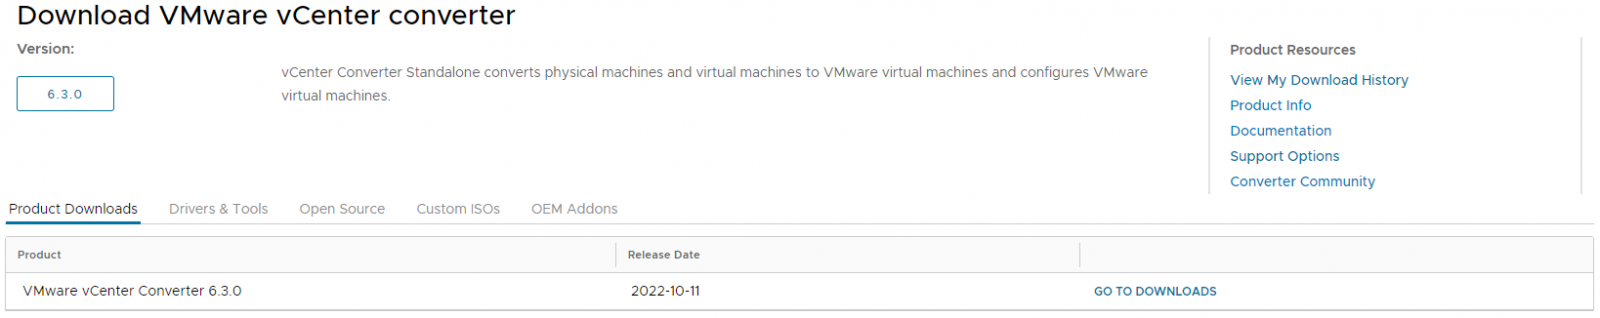 Download VMware vCenter Converter 6.3.0